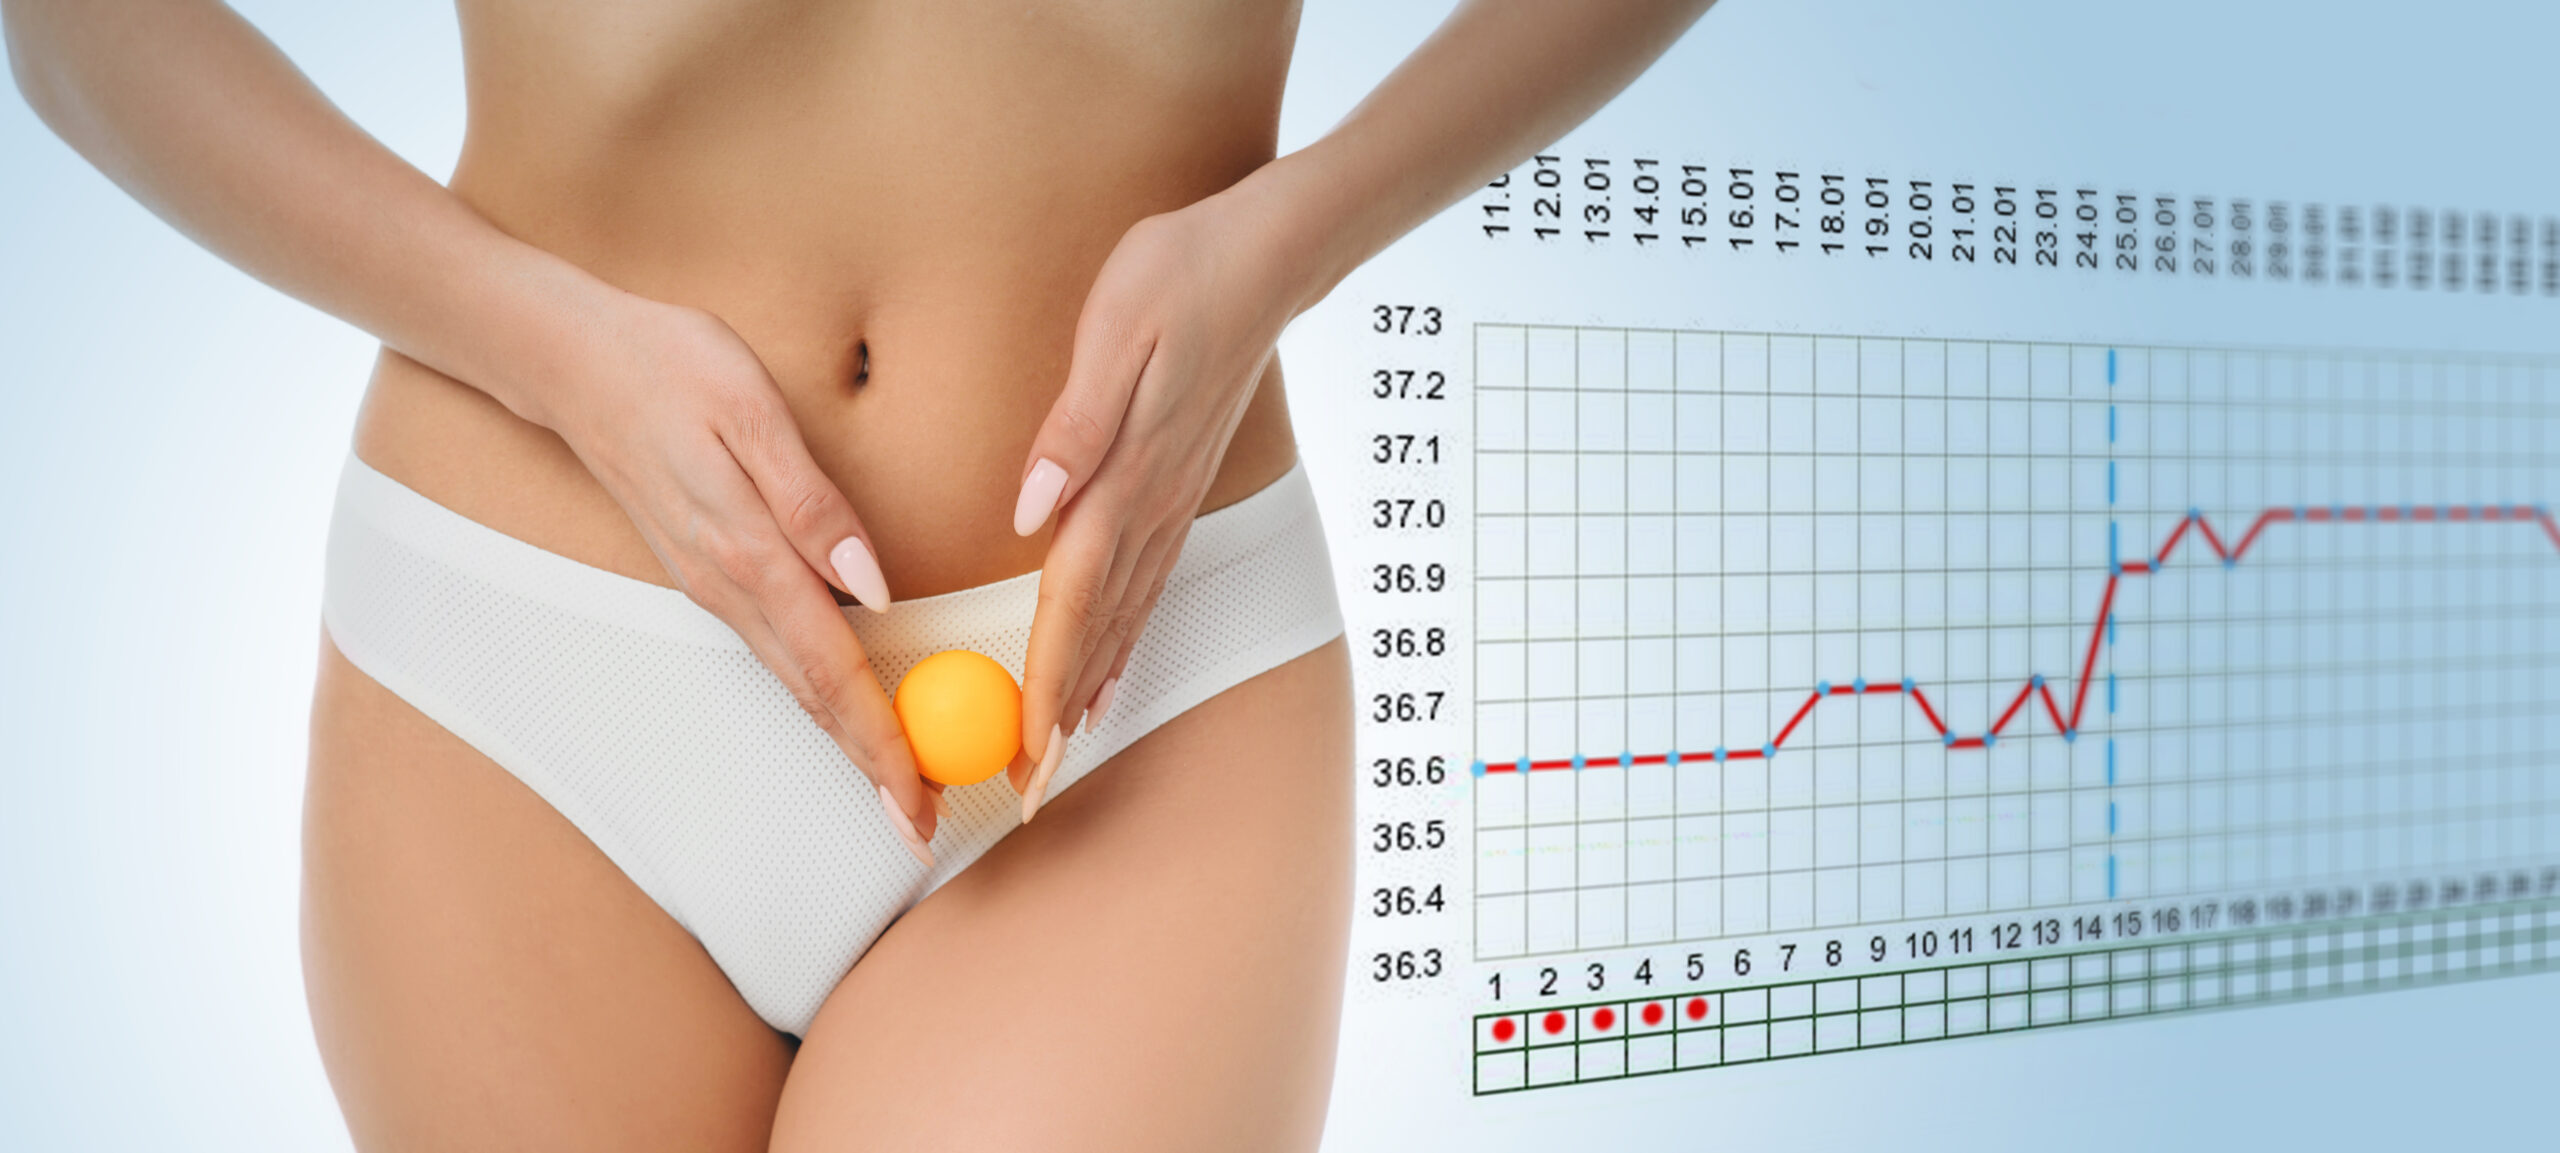 woman showing ovulation process holding near ovary ball like ovum. on the background basal body temperature chart